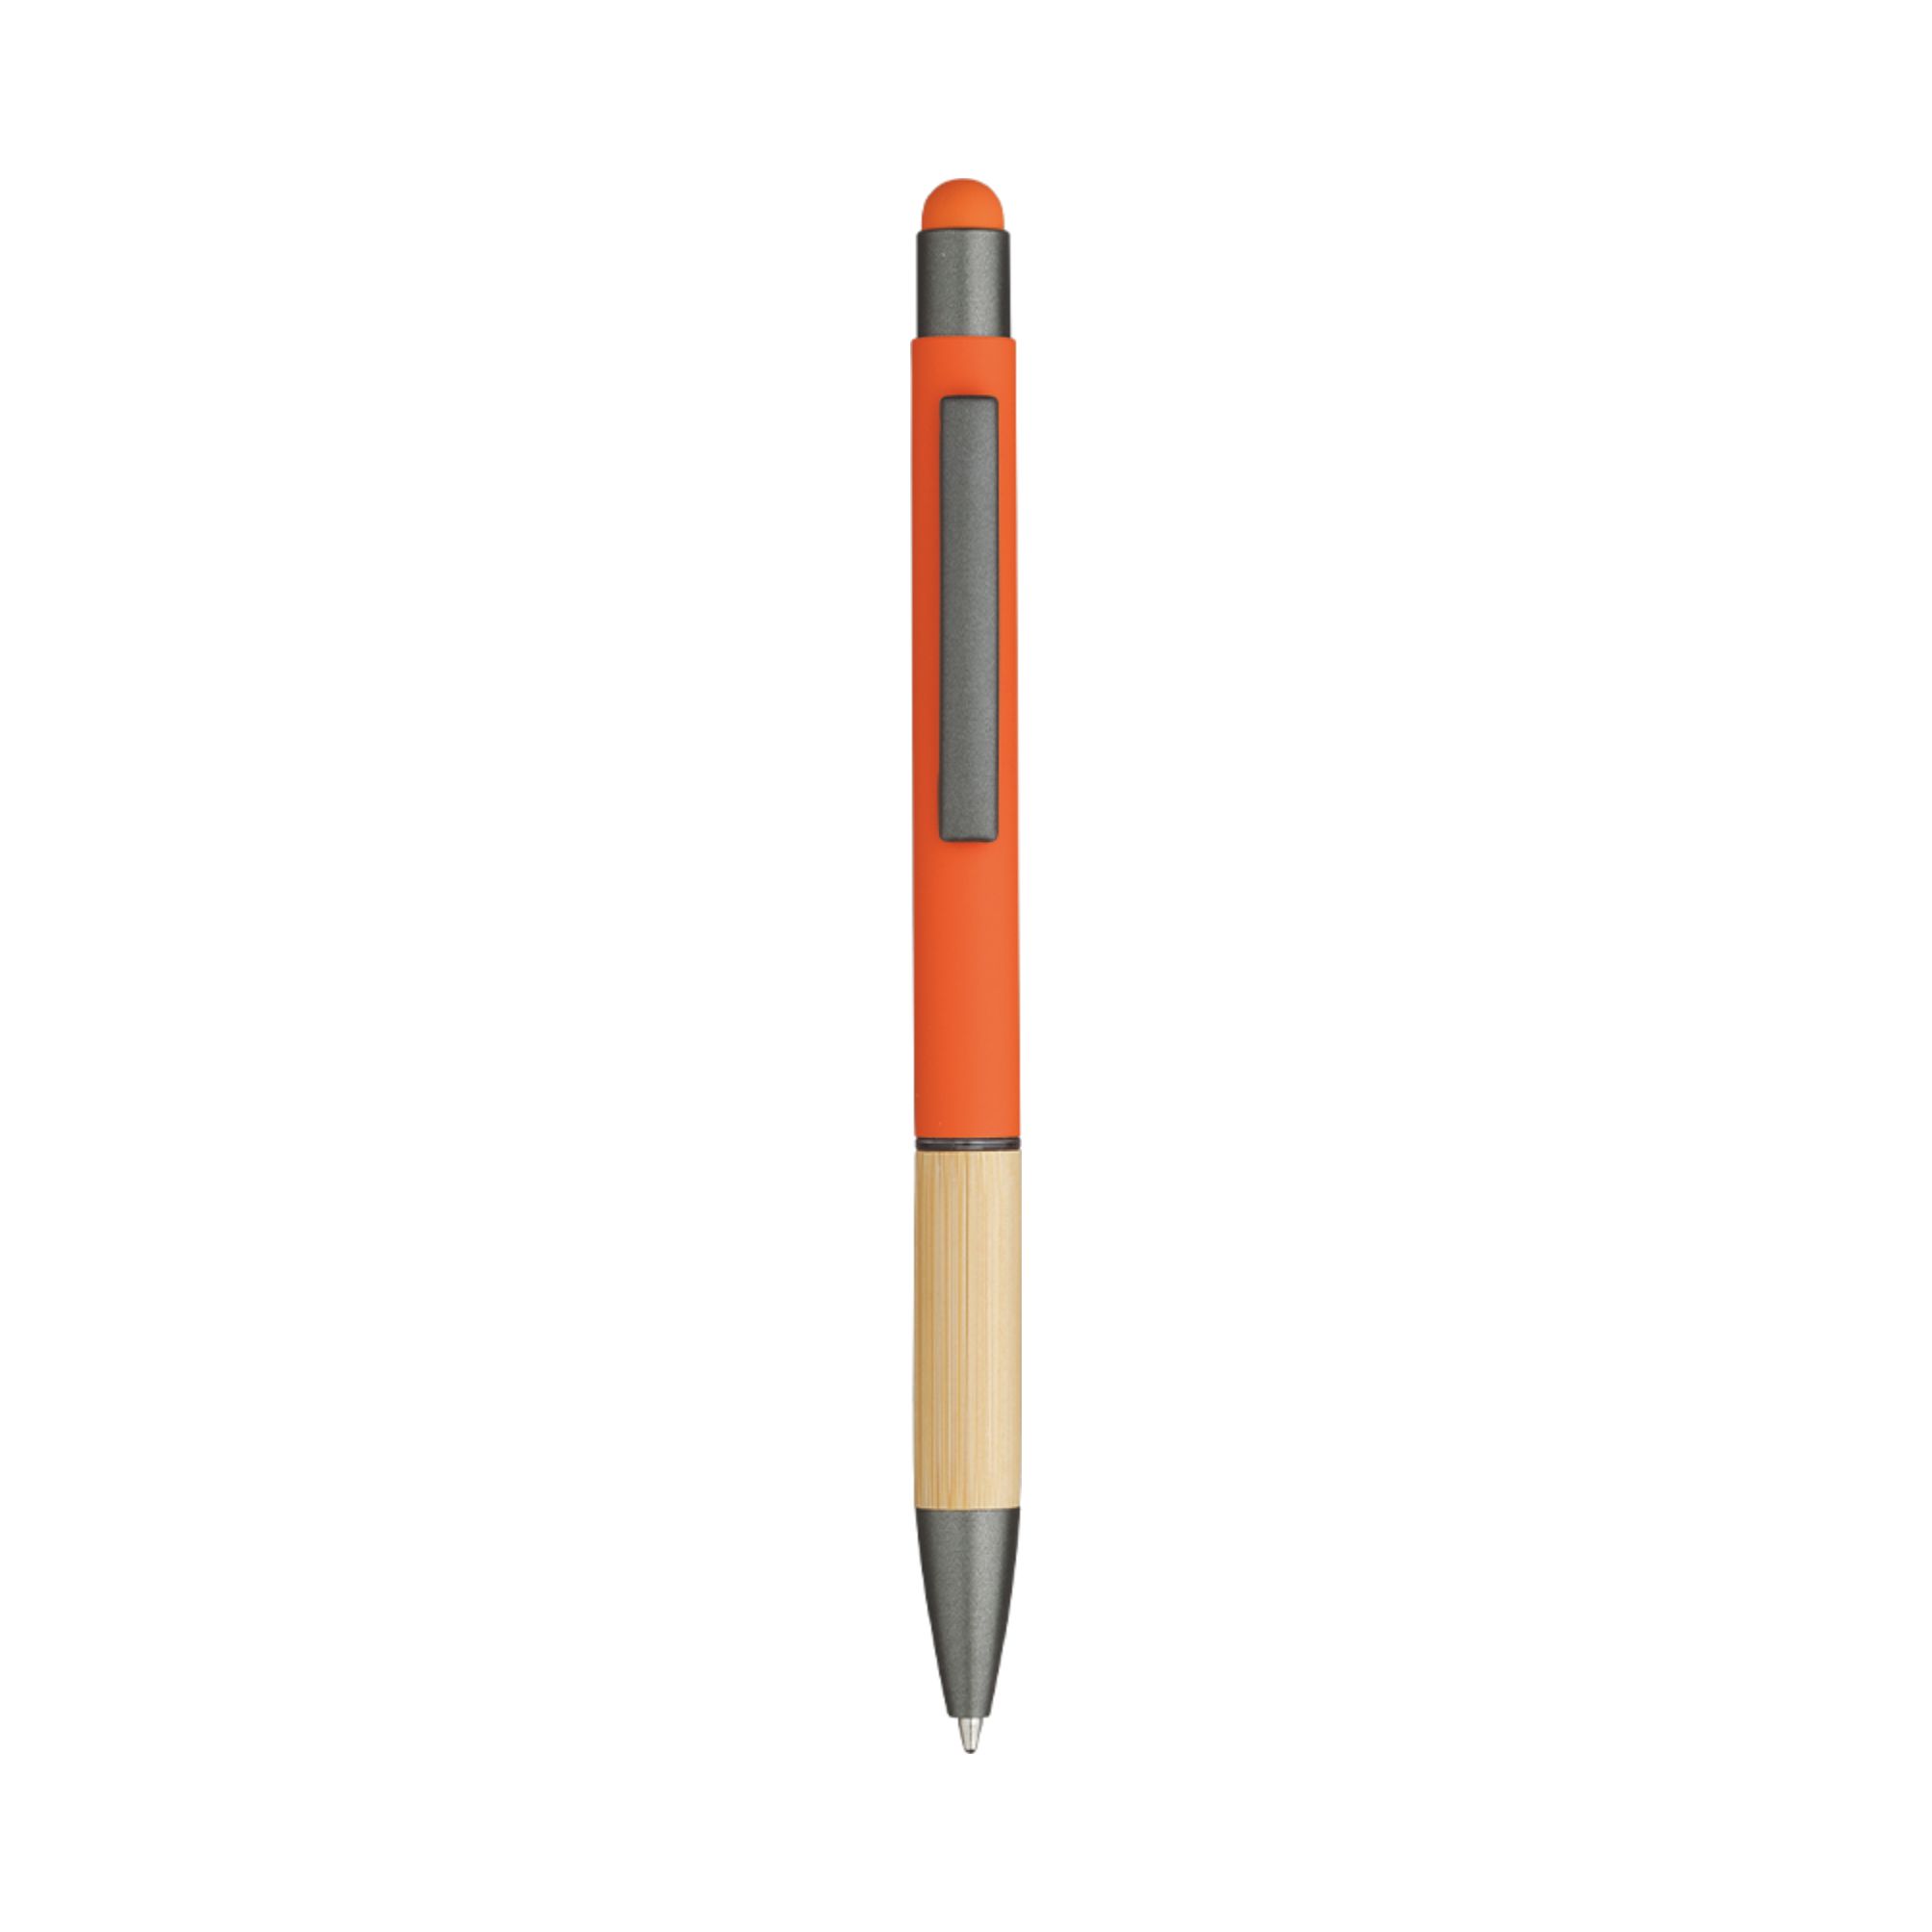 5628-conny-penna-sfera-eco-touch-arancio.jpg